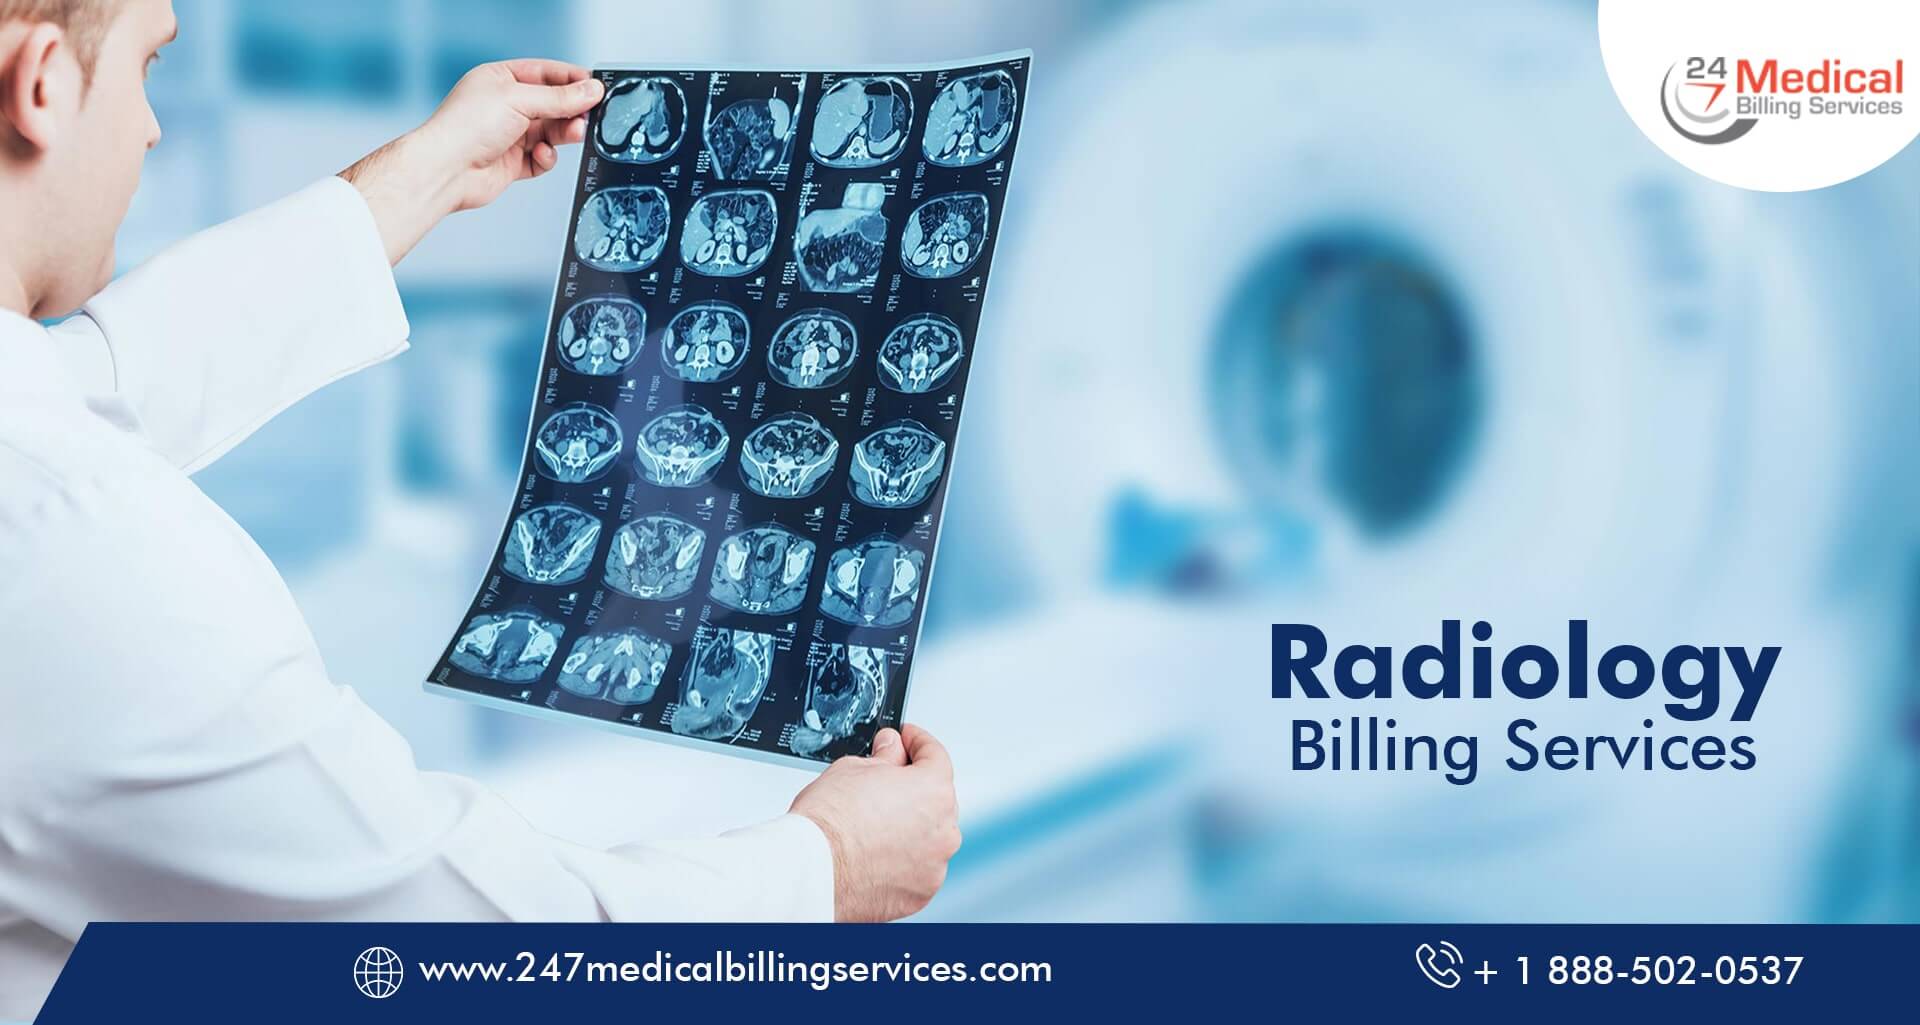  Radiology Billing Services in Seattle, Washington (WA)